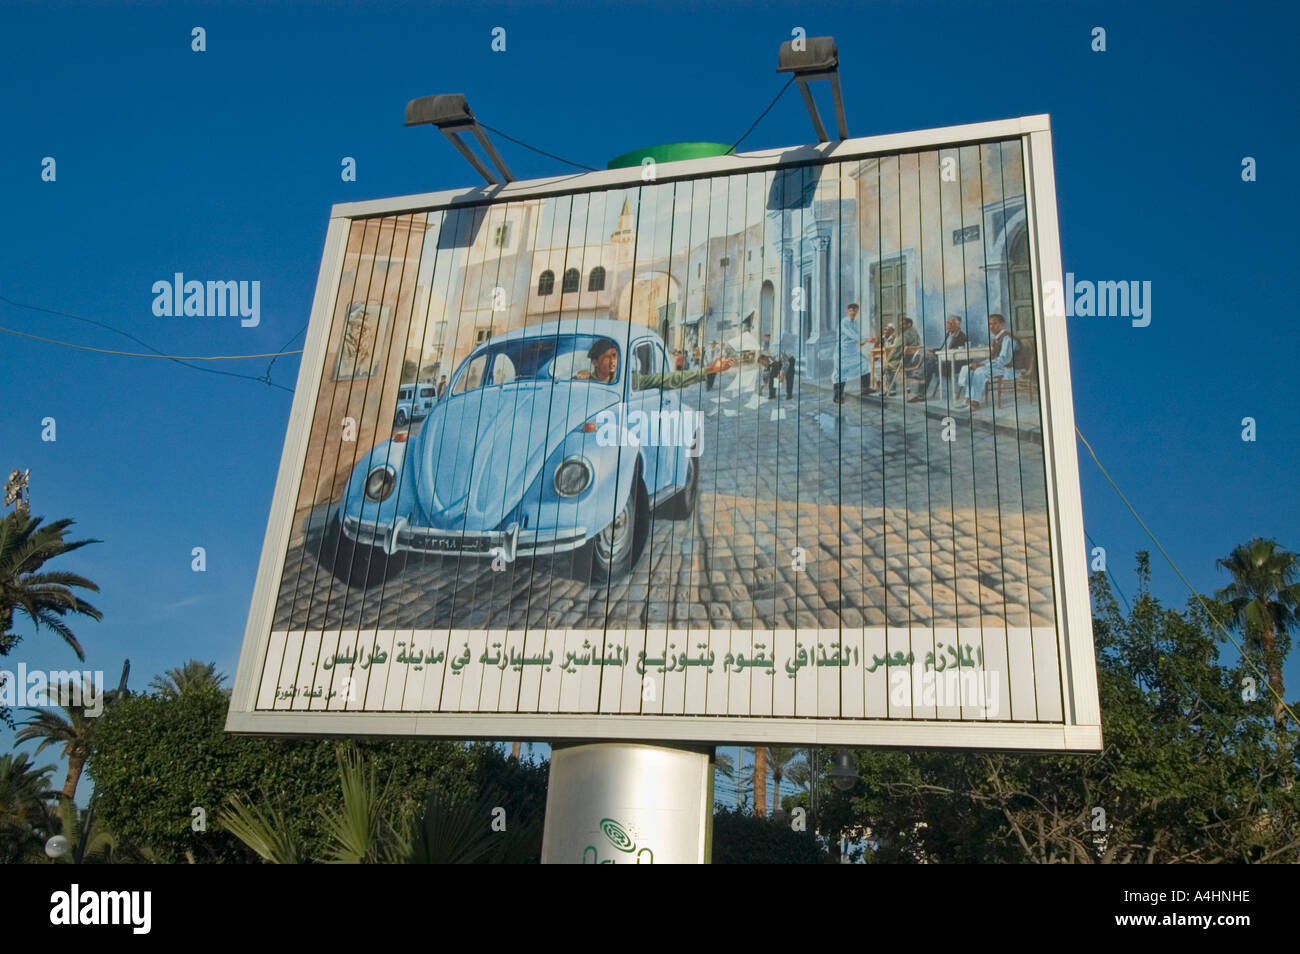 Peinture, bilboard du leader révolutionnaire libyen Muammar al-Kadhafi, Muammar al-Kadhafi, dans sa Volkswagen Beetle, Tripoli, Libye Banque D'Images